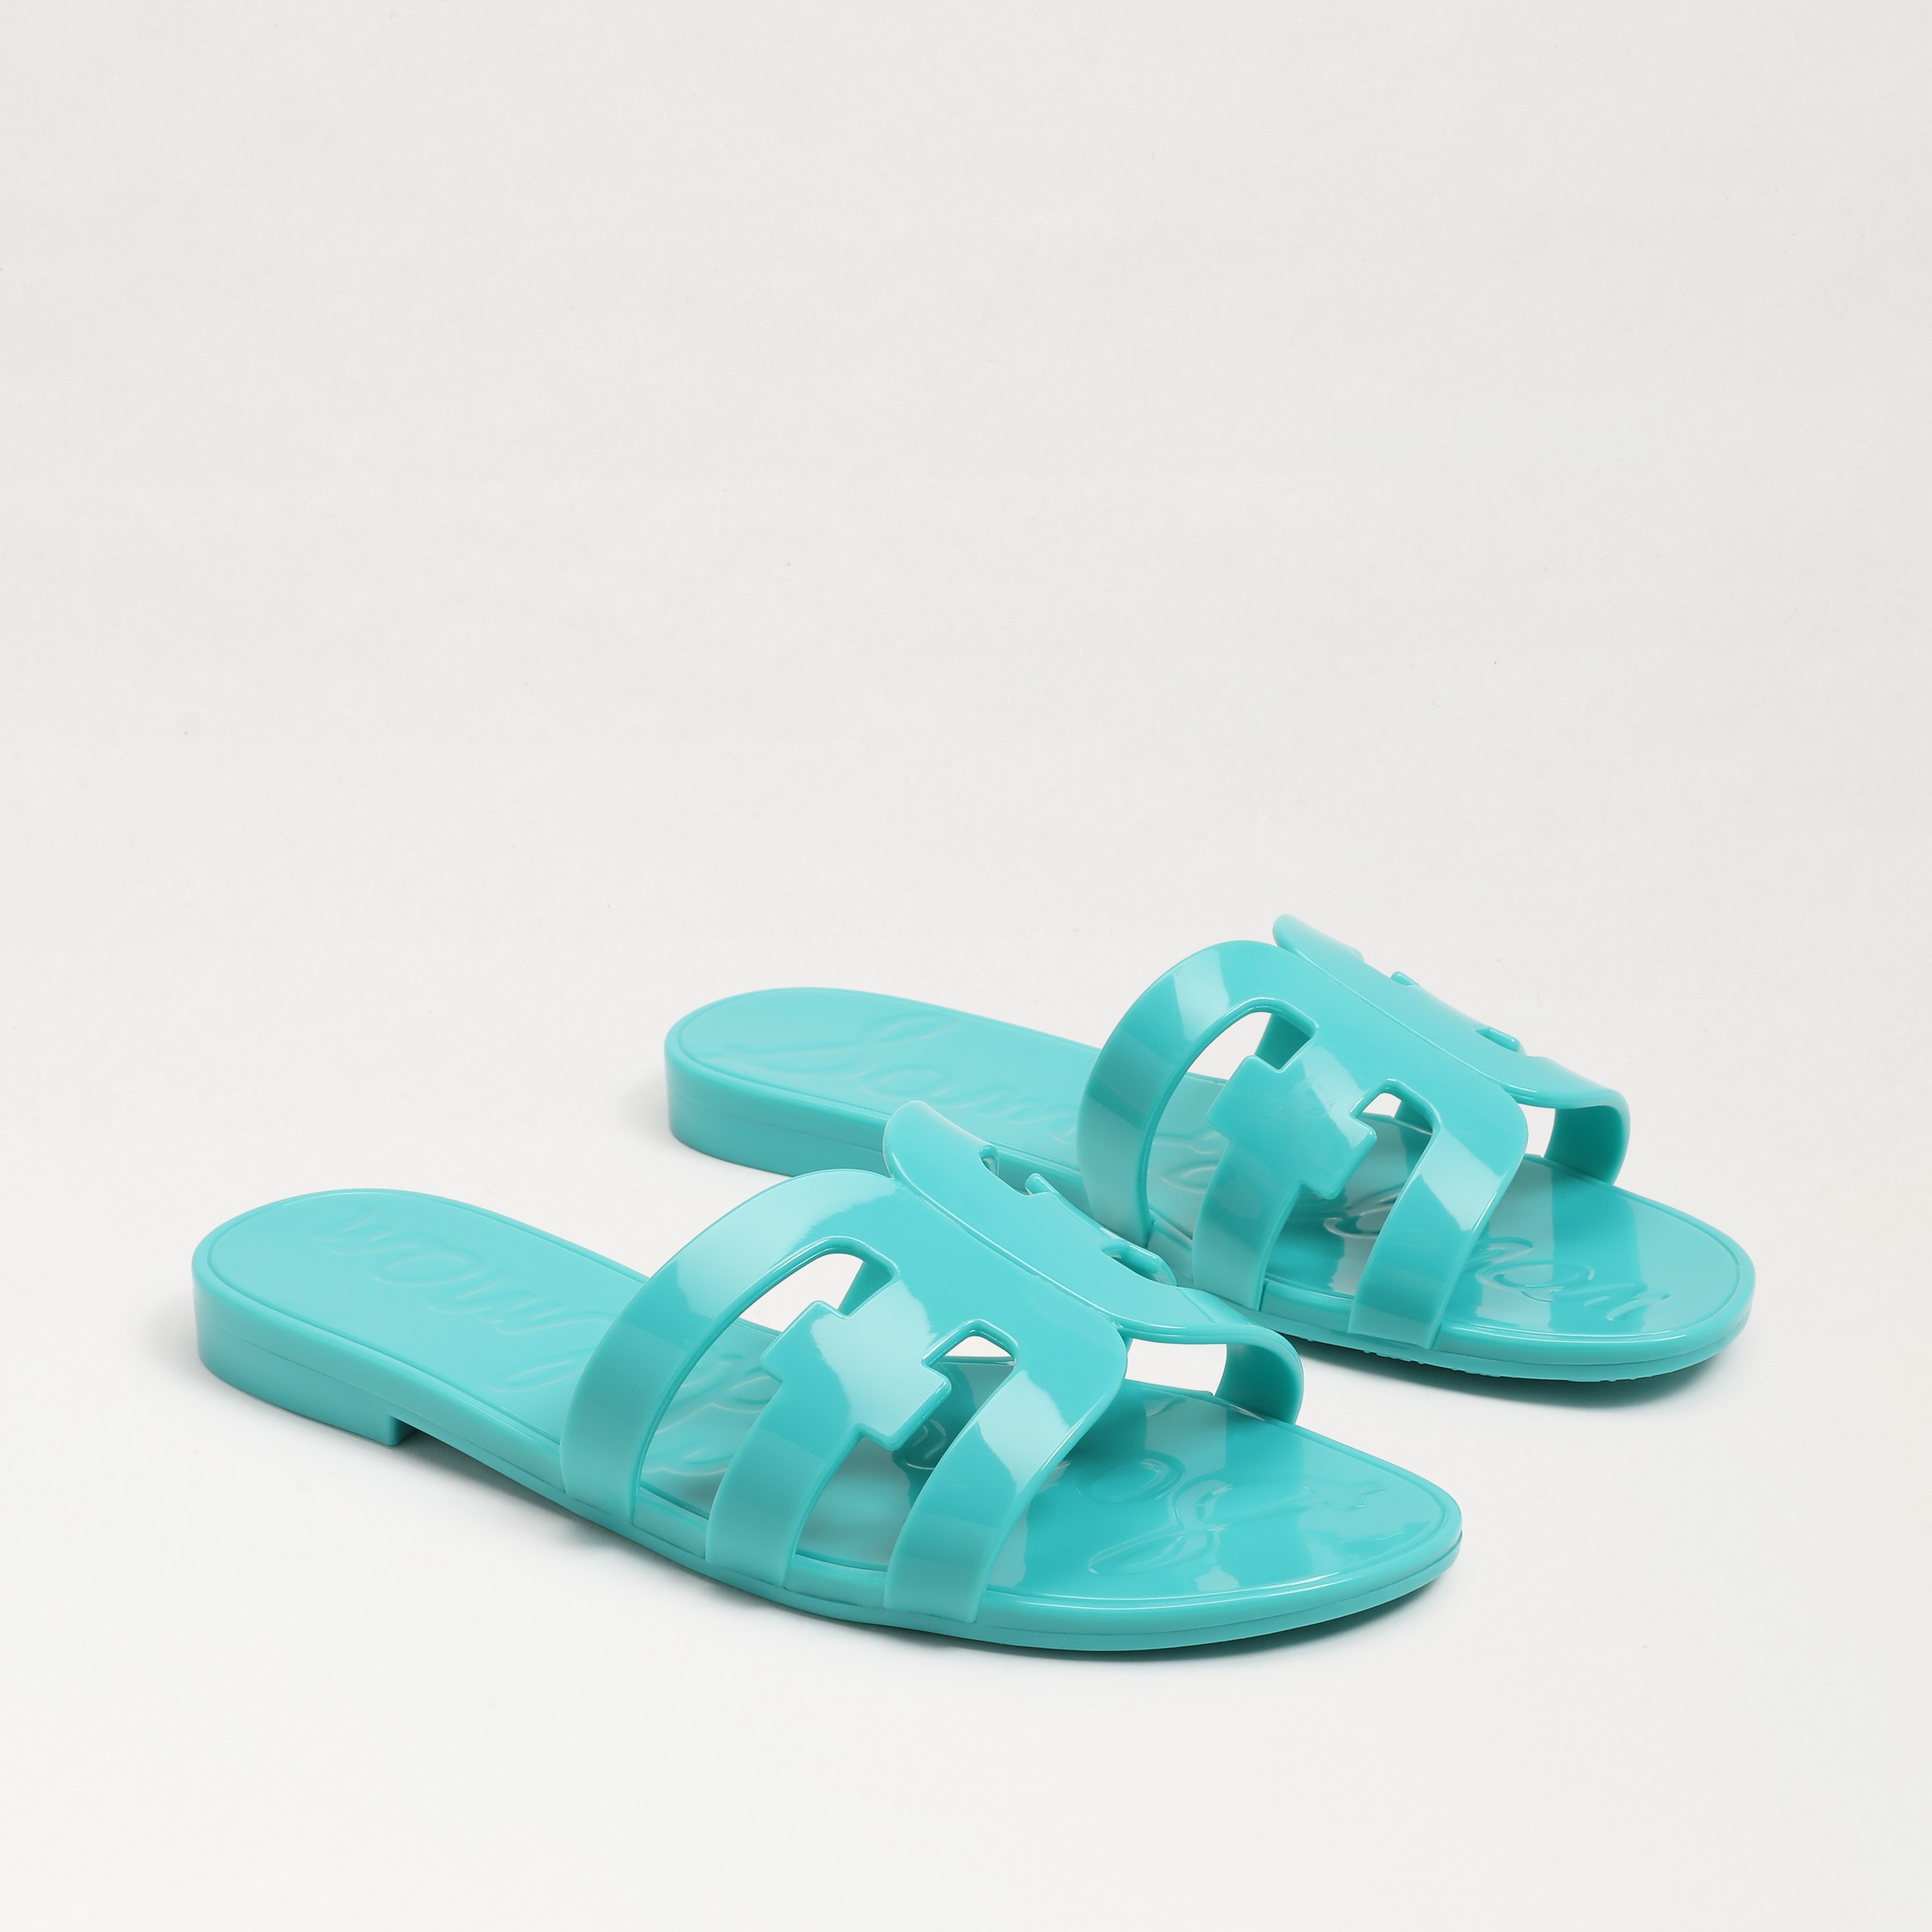 Sam Edelman Women's Bay Jelly Slide Sandals - Black - Size 11